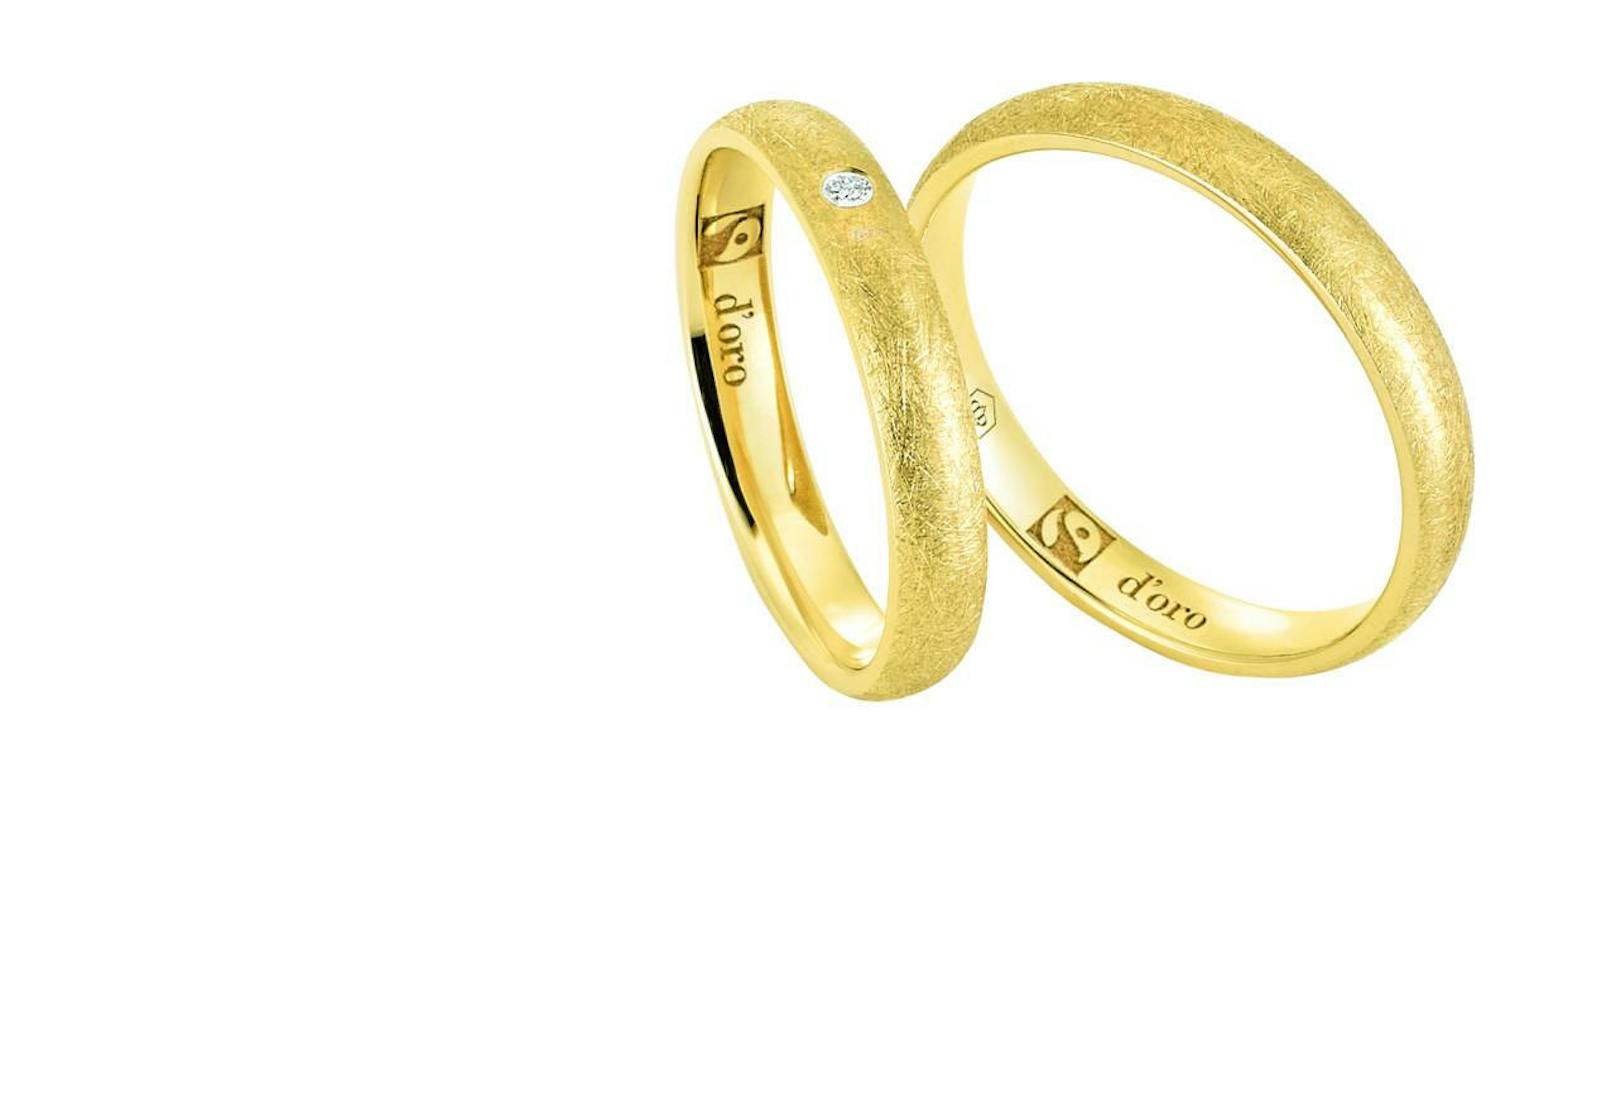 Dorotheum Juwelier: Fairtrade Eheringe aus Gold